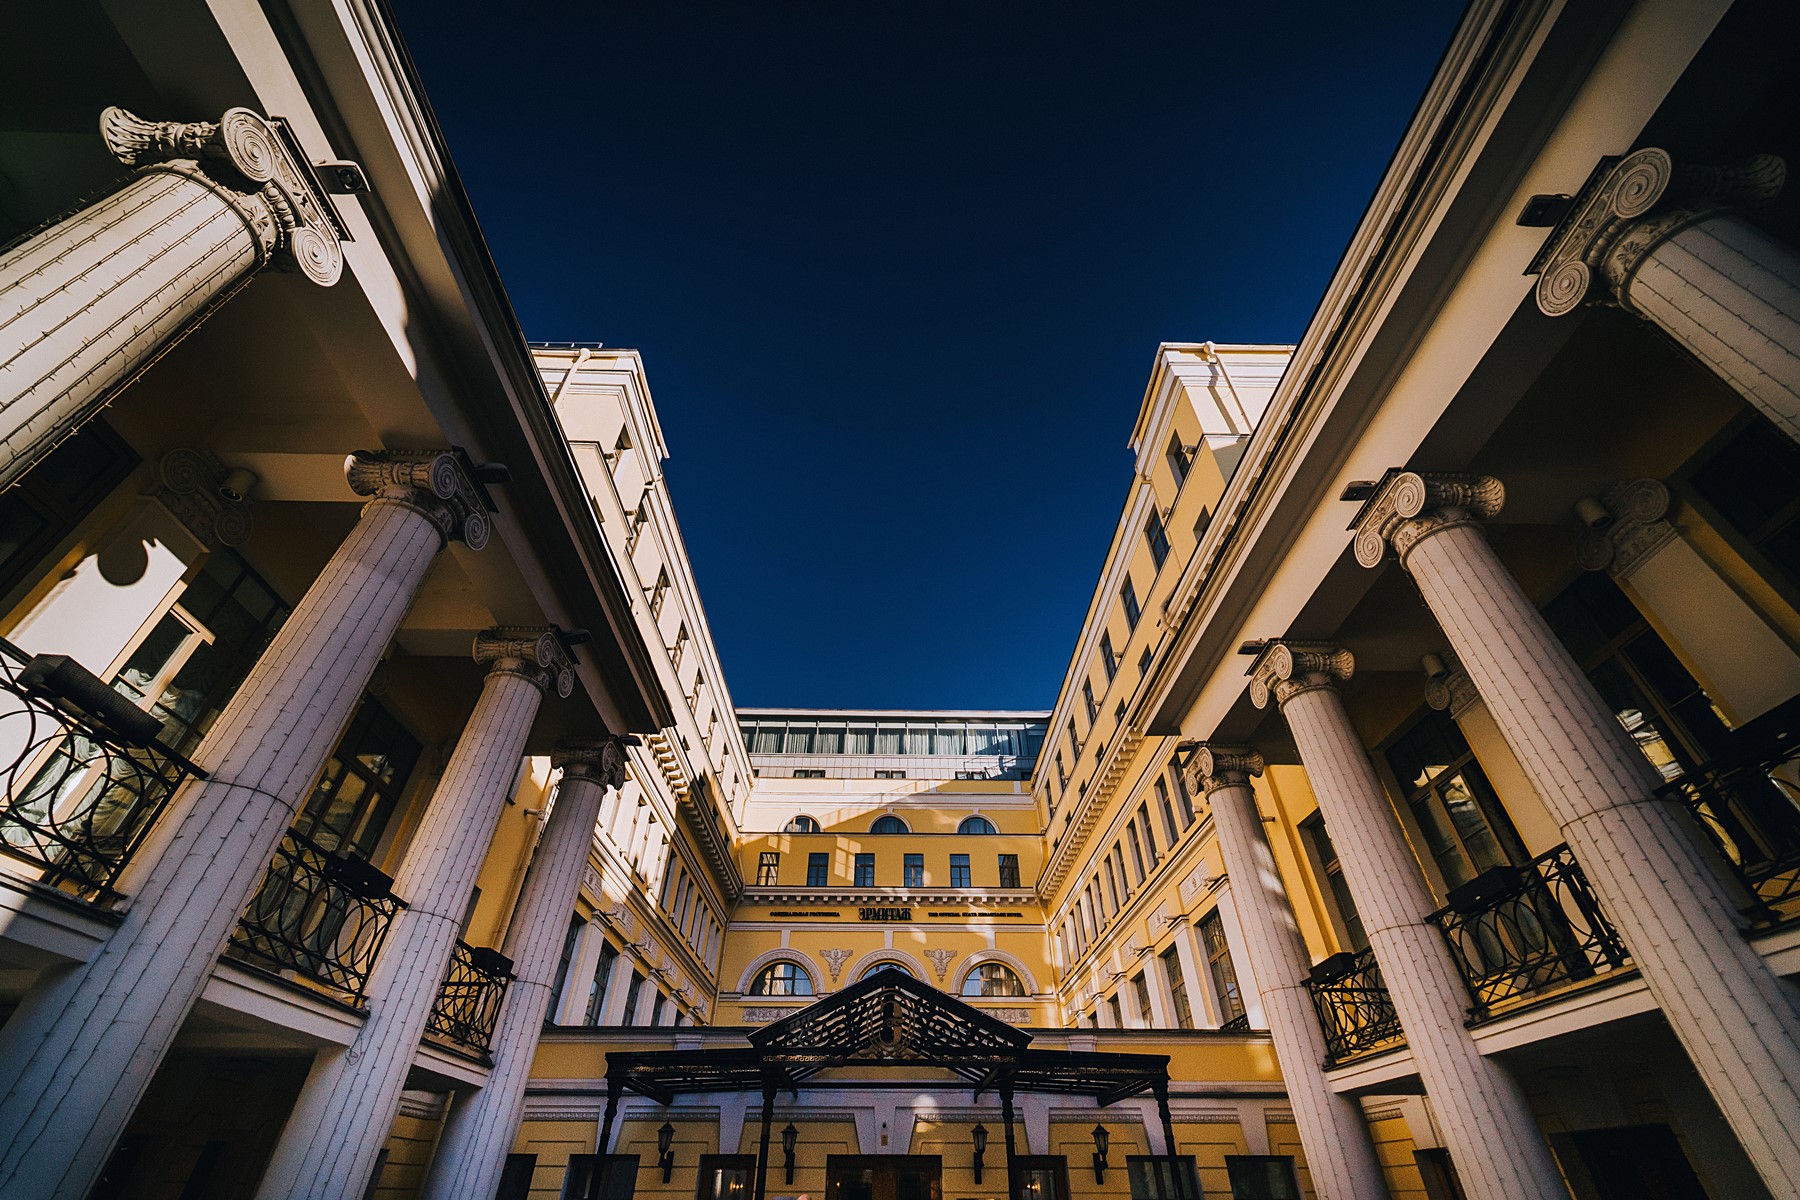 гостиницы санкт петербурга у эрмитажа